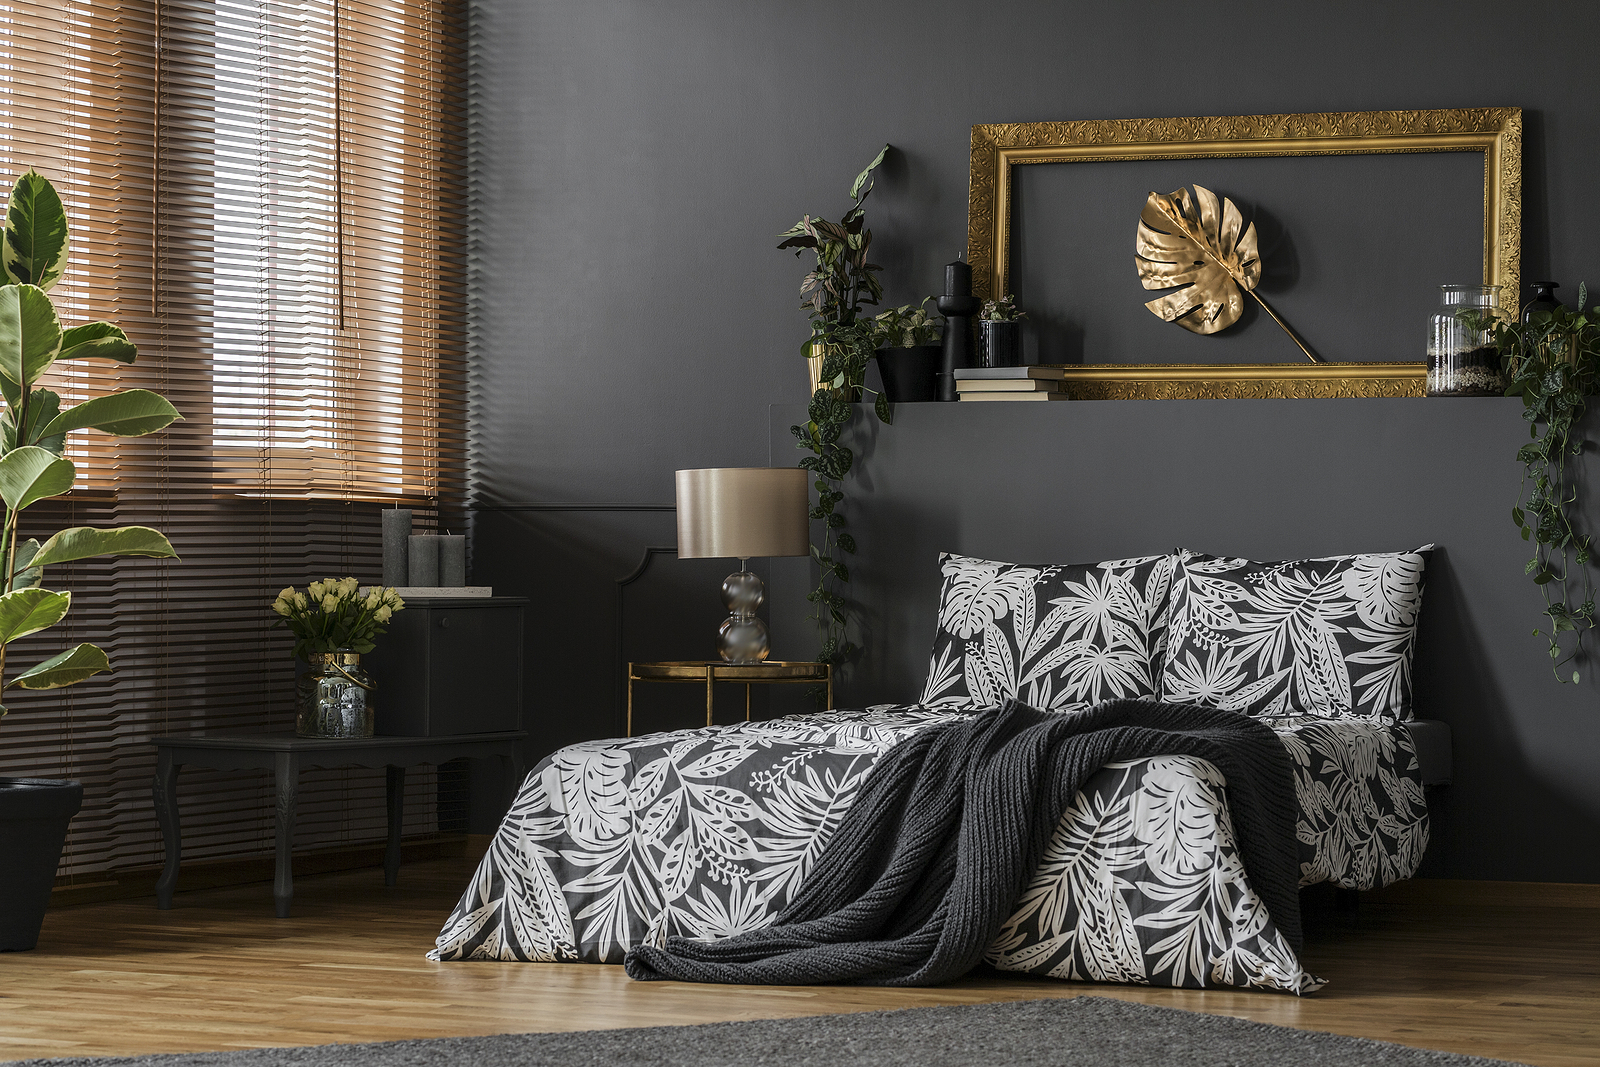 Patterned bed sheets tips for decoring master bedroom